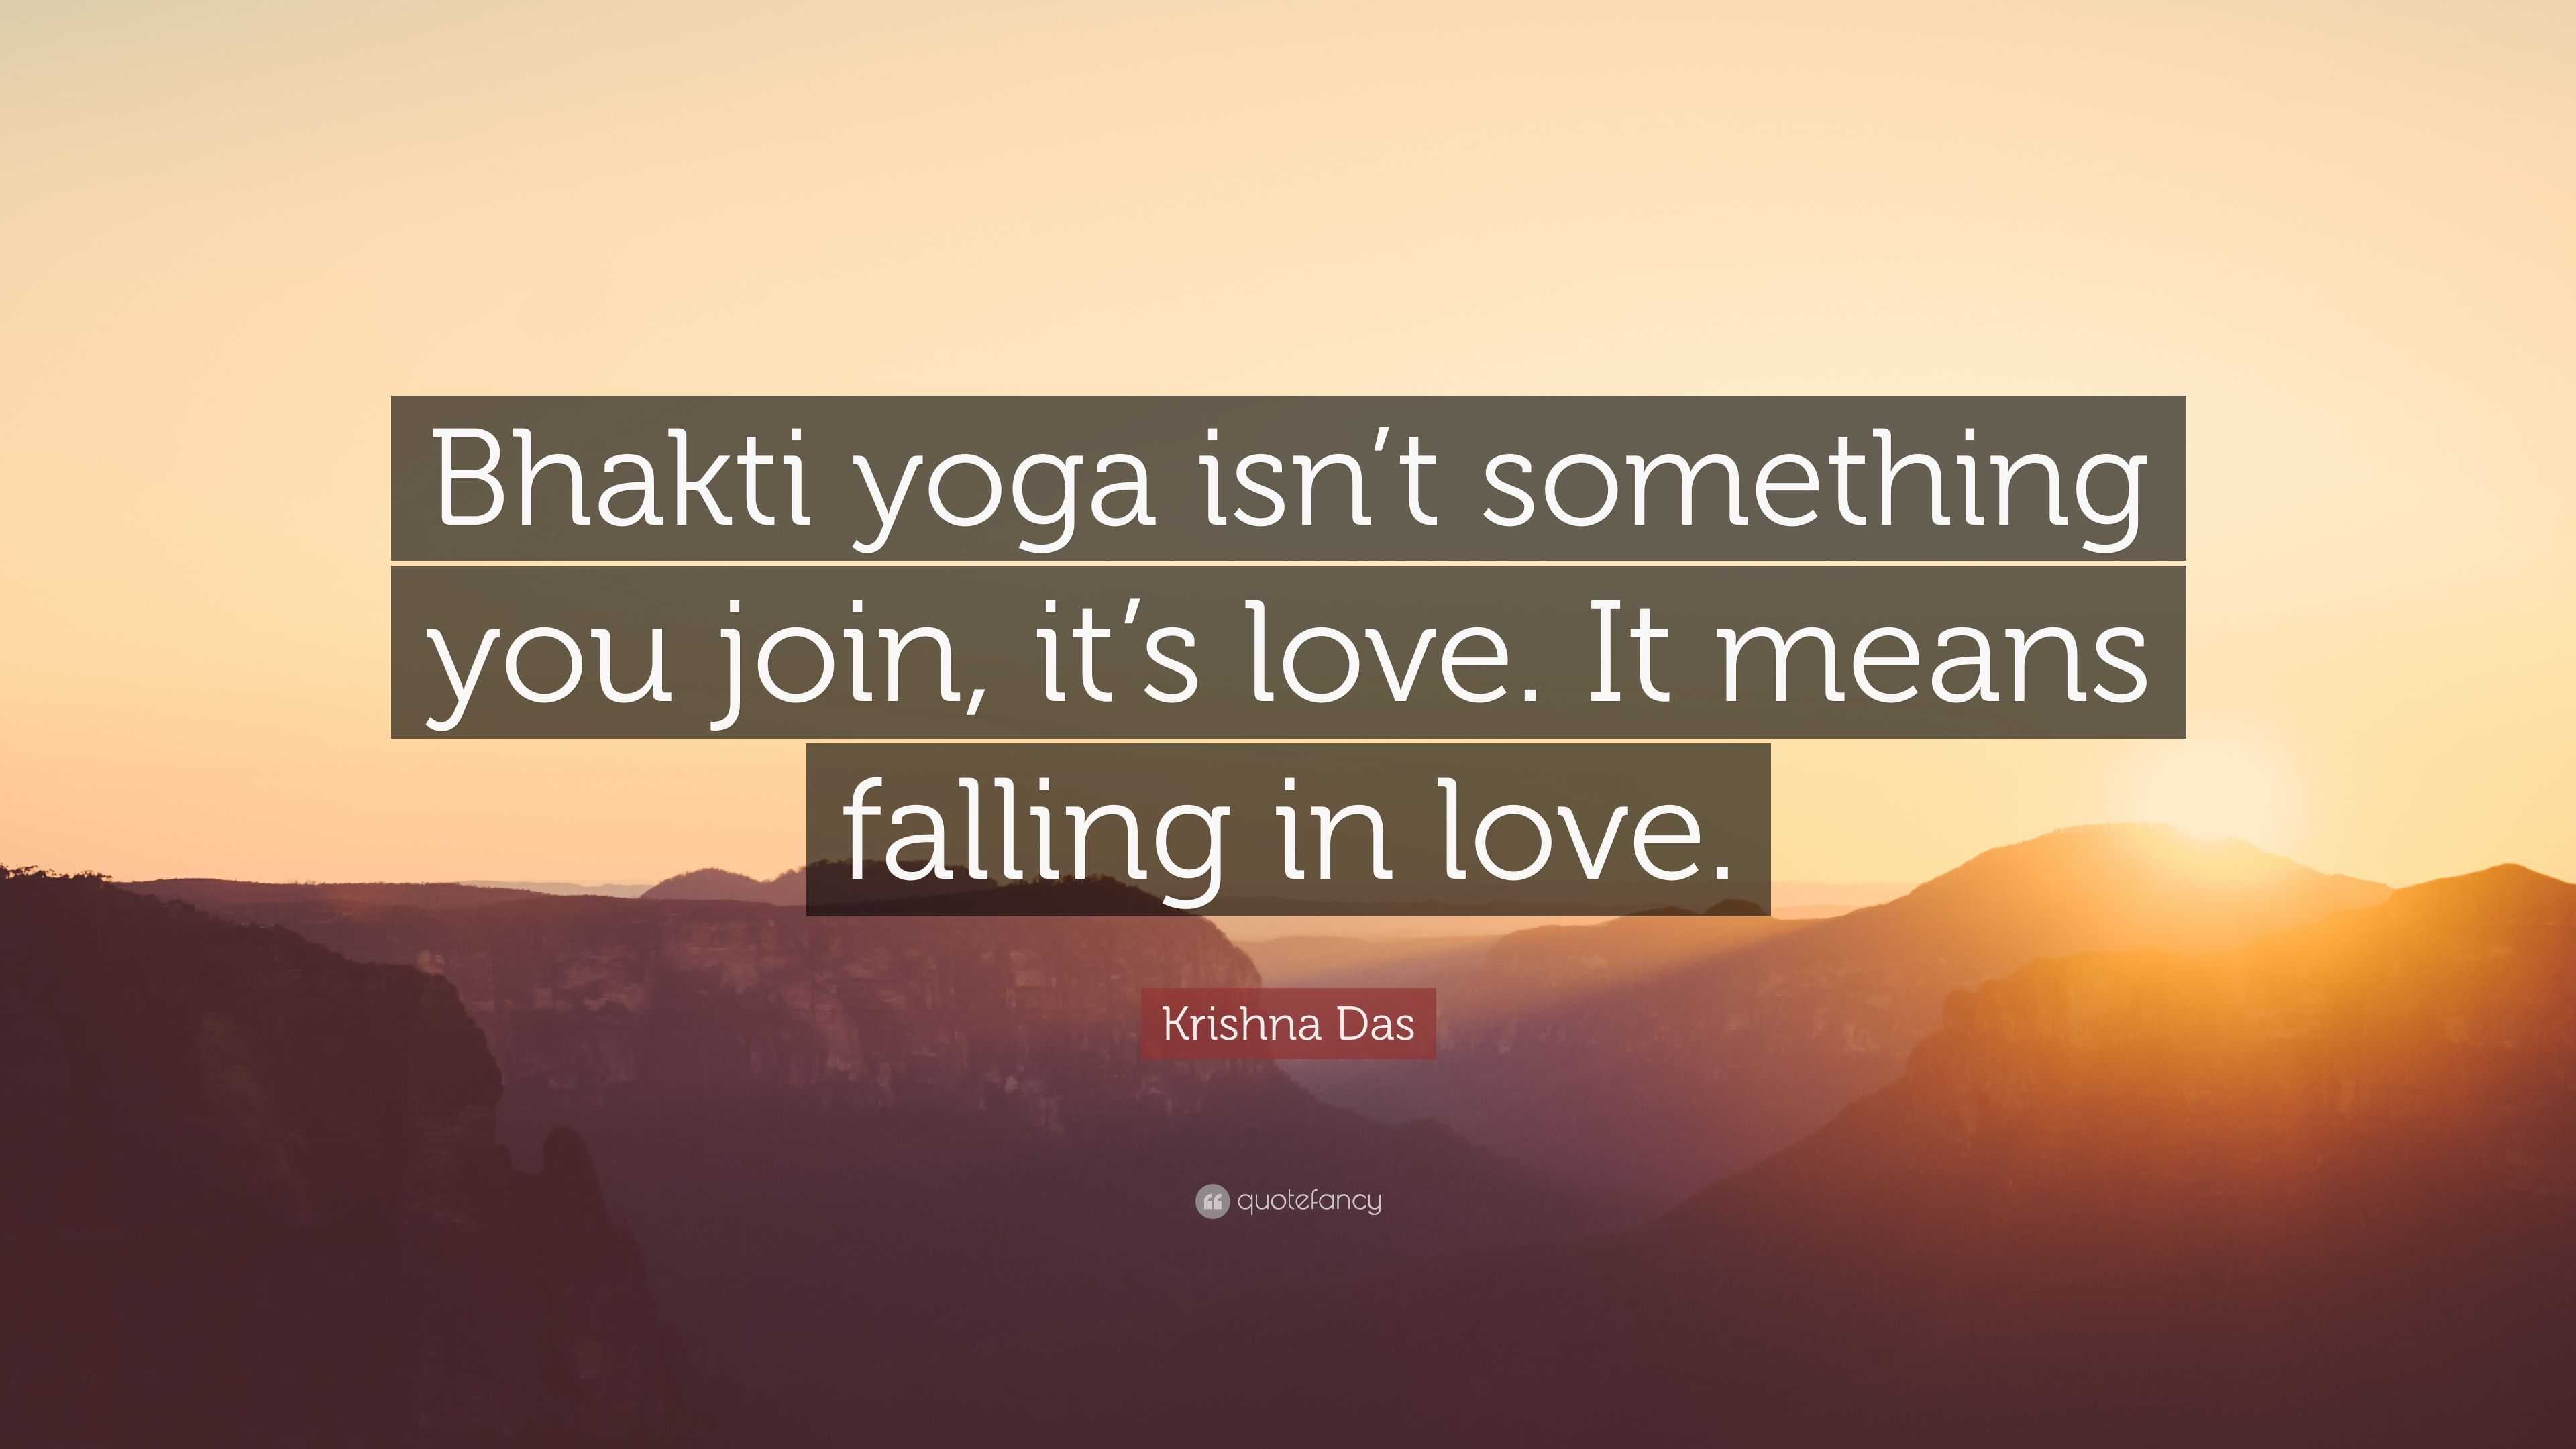 Krishna Das Quote: “Bhakti yoga isn’t something you join, it’s love. It ...